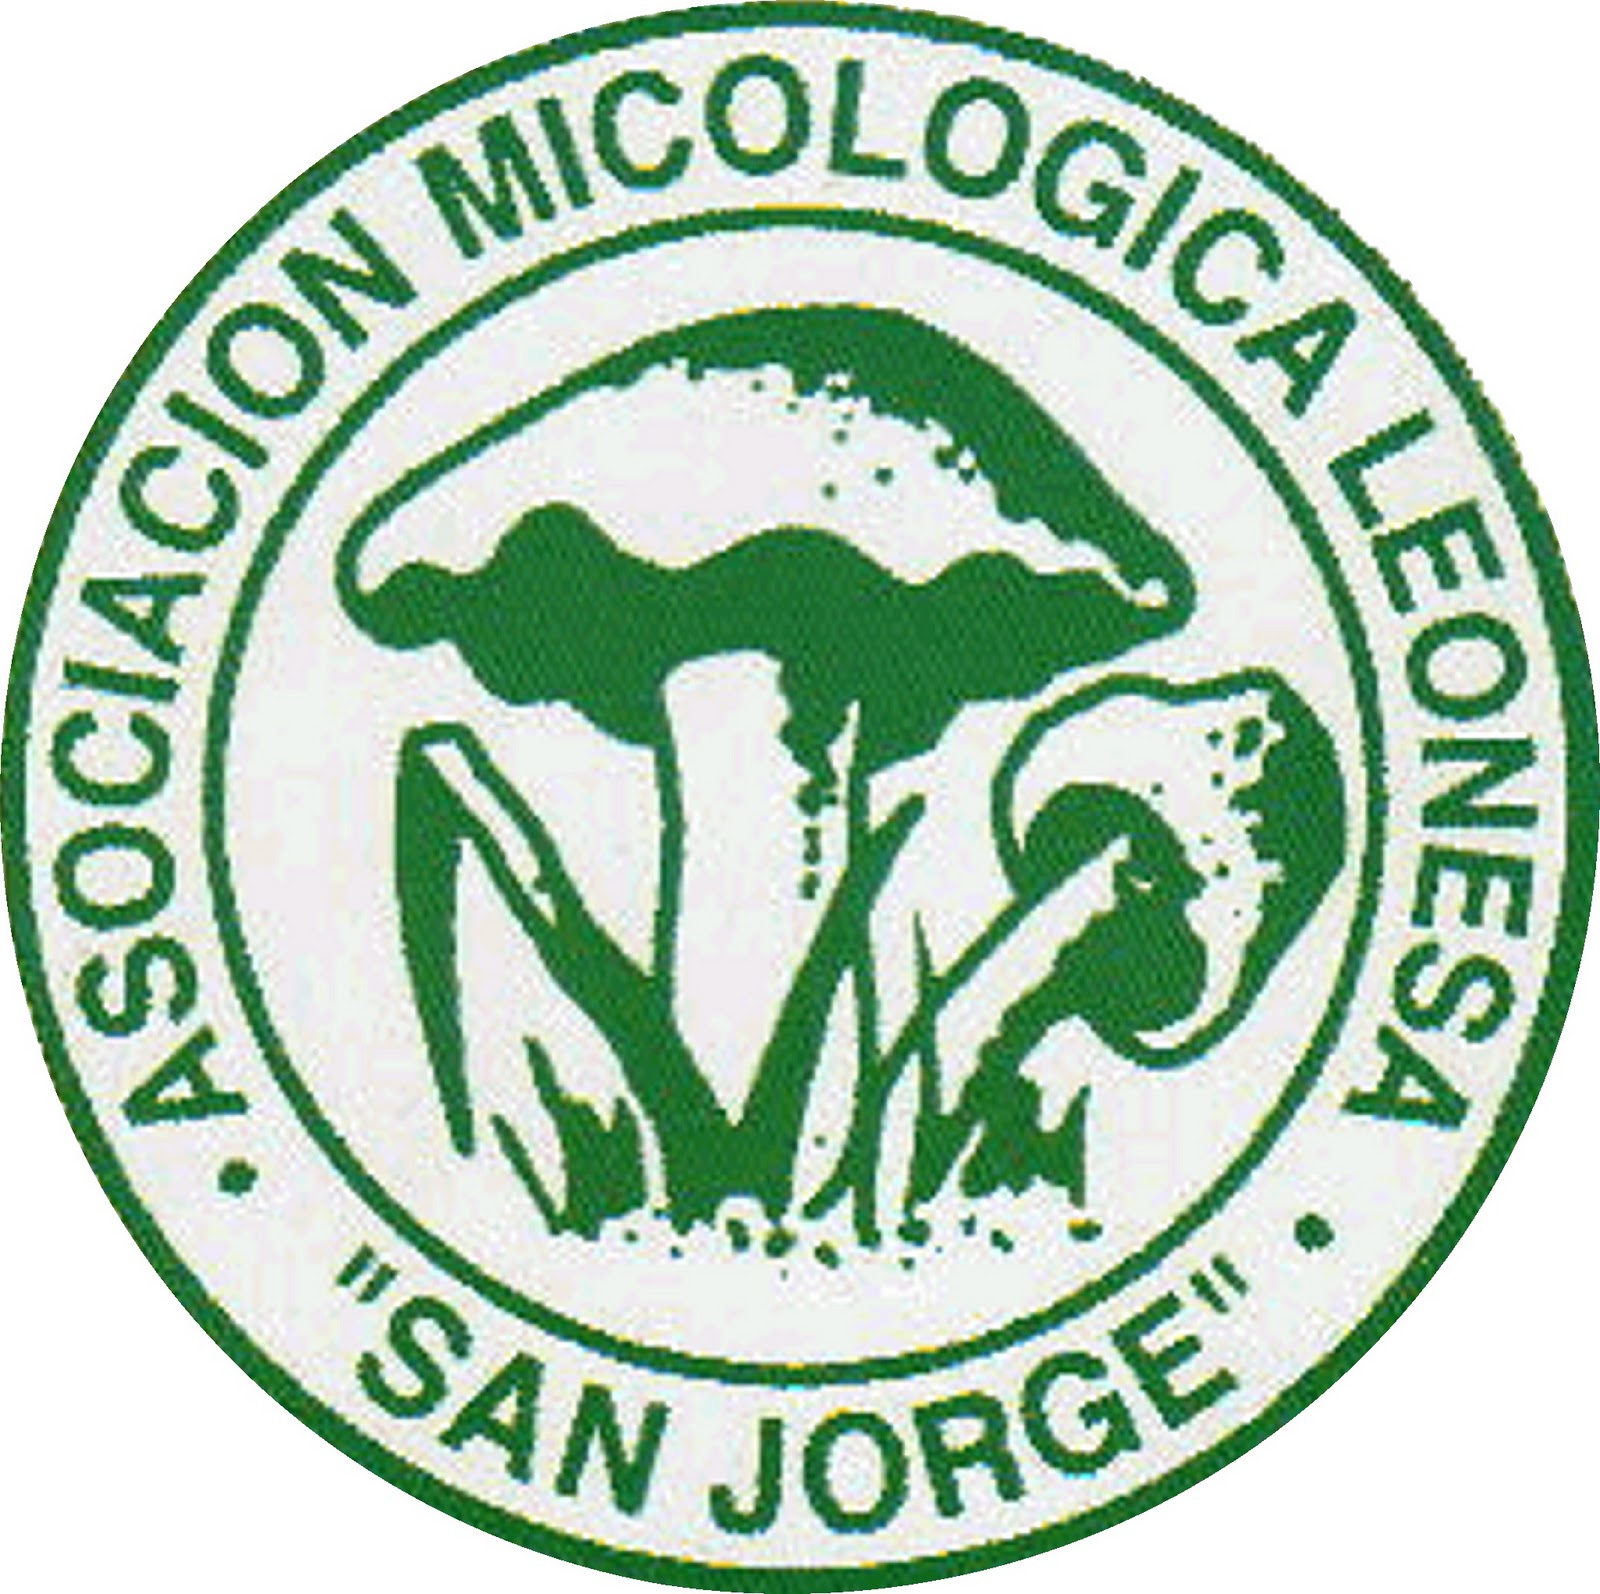 Asociación Micológica Leonesa "San Jorge"